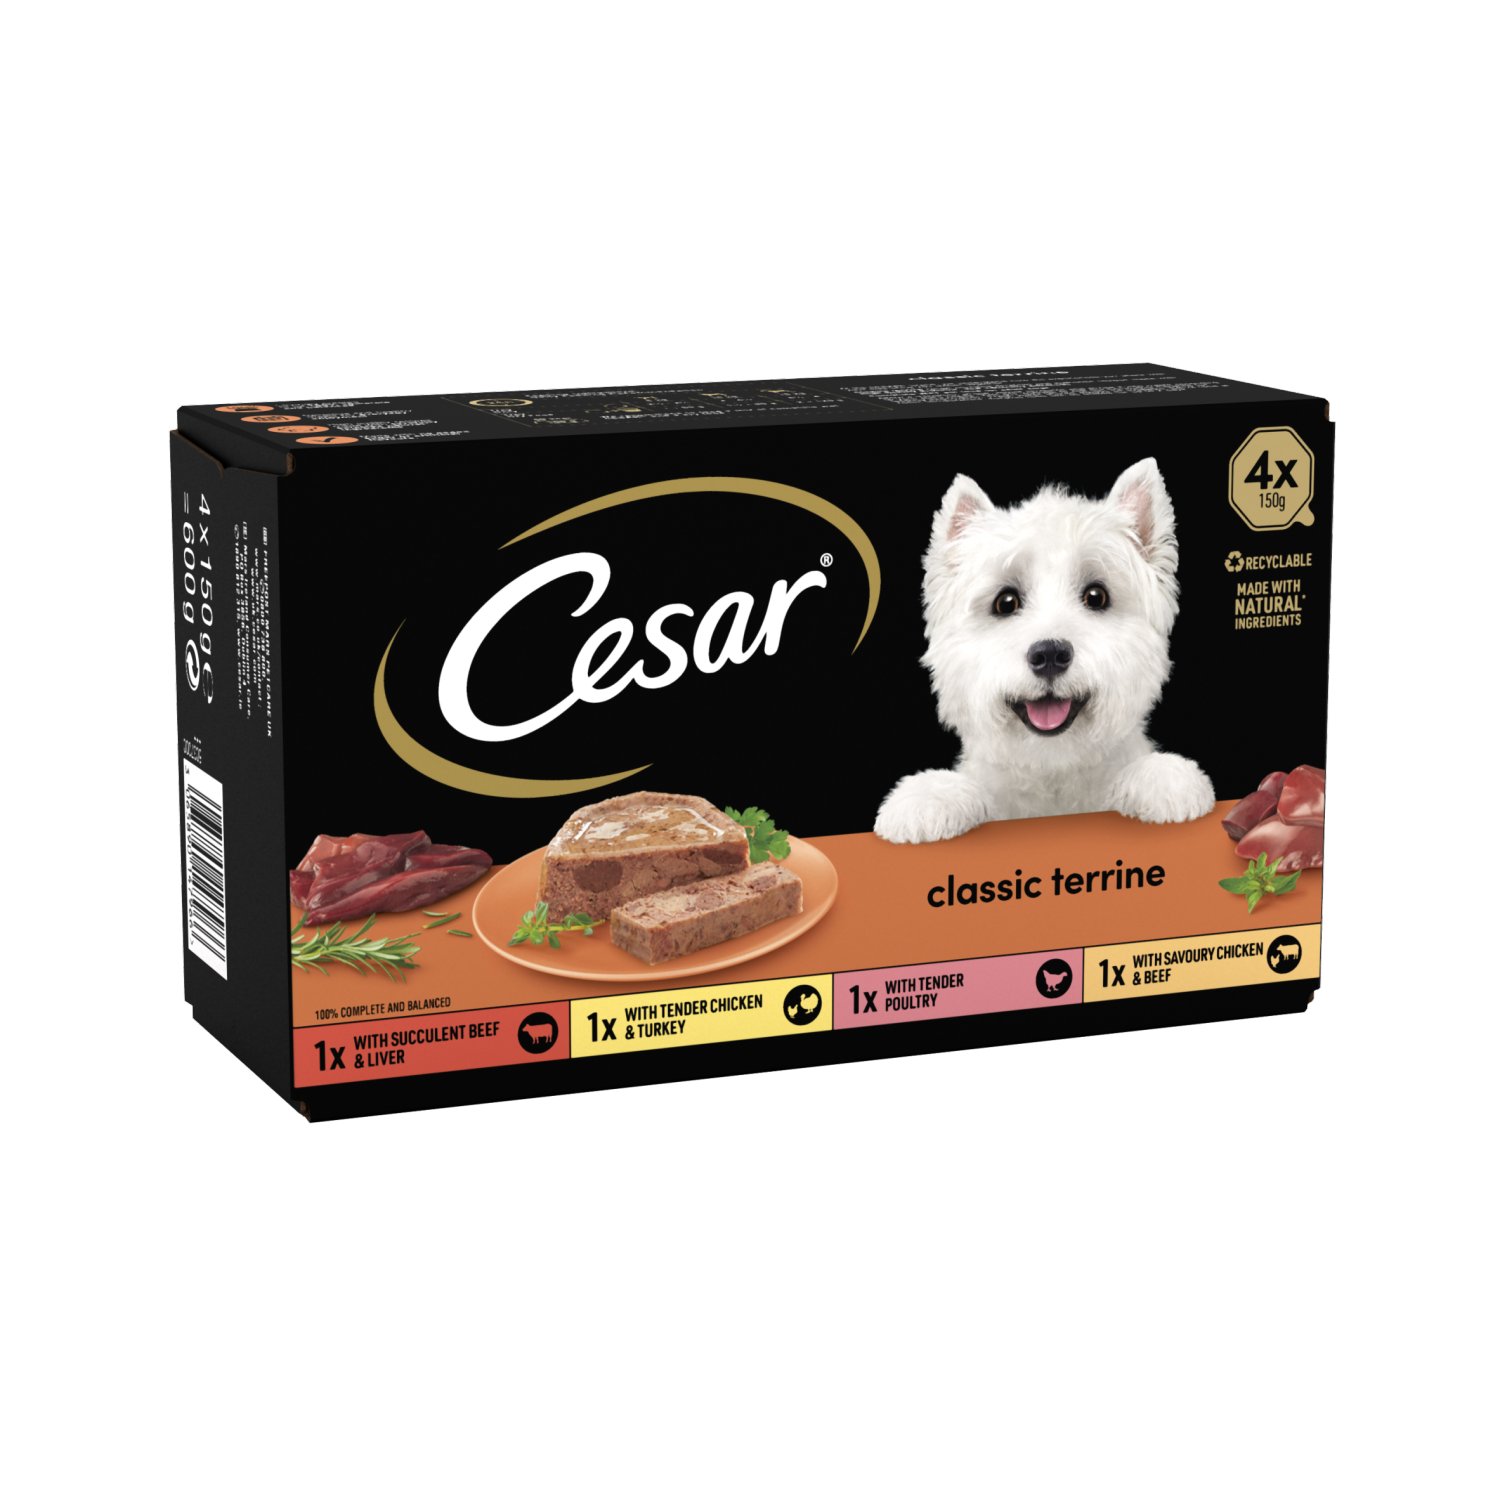 Cesar Classic Terraine Variety Dog Food 4 Pack (150 g)